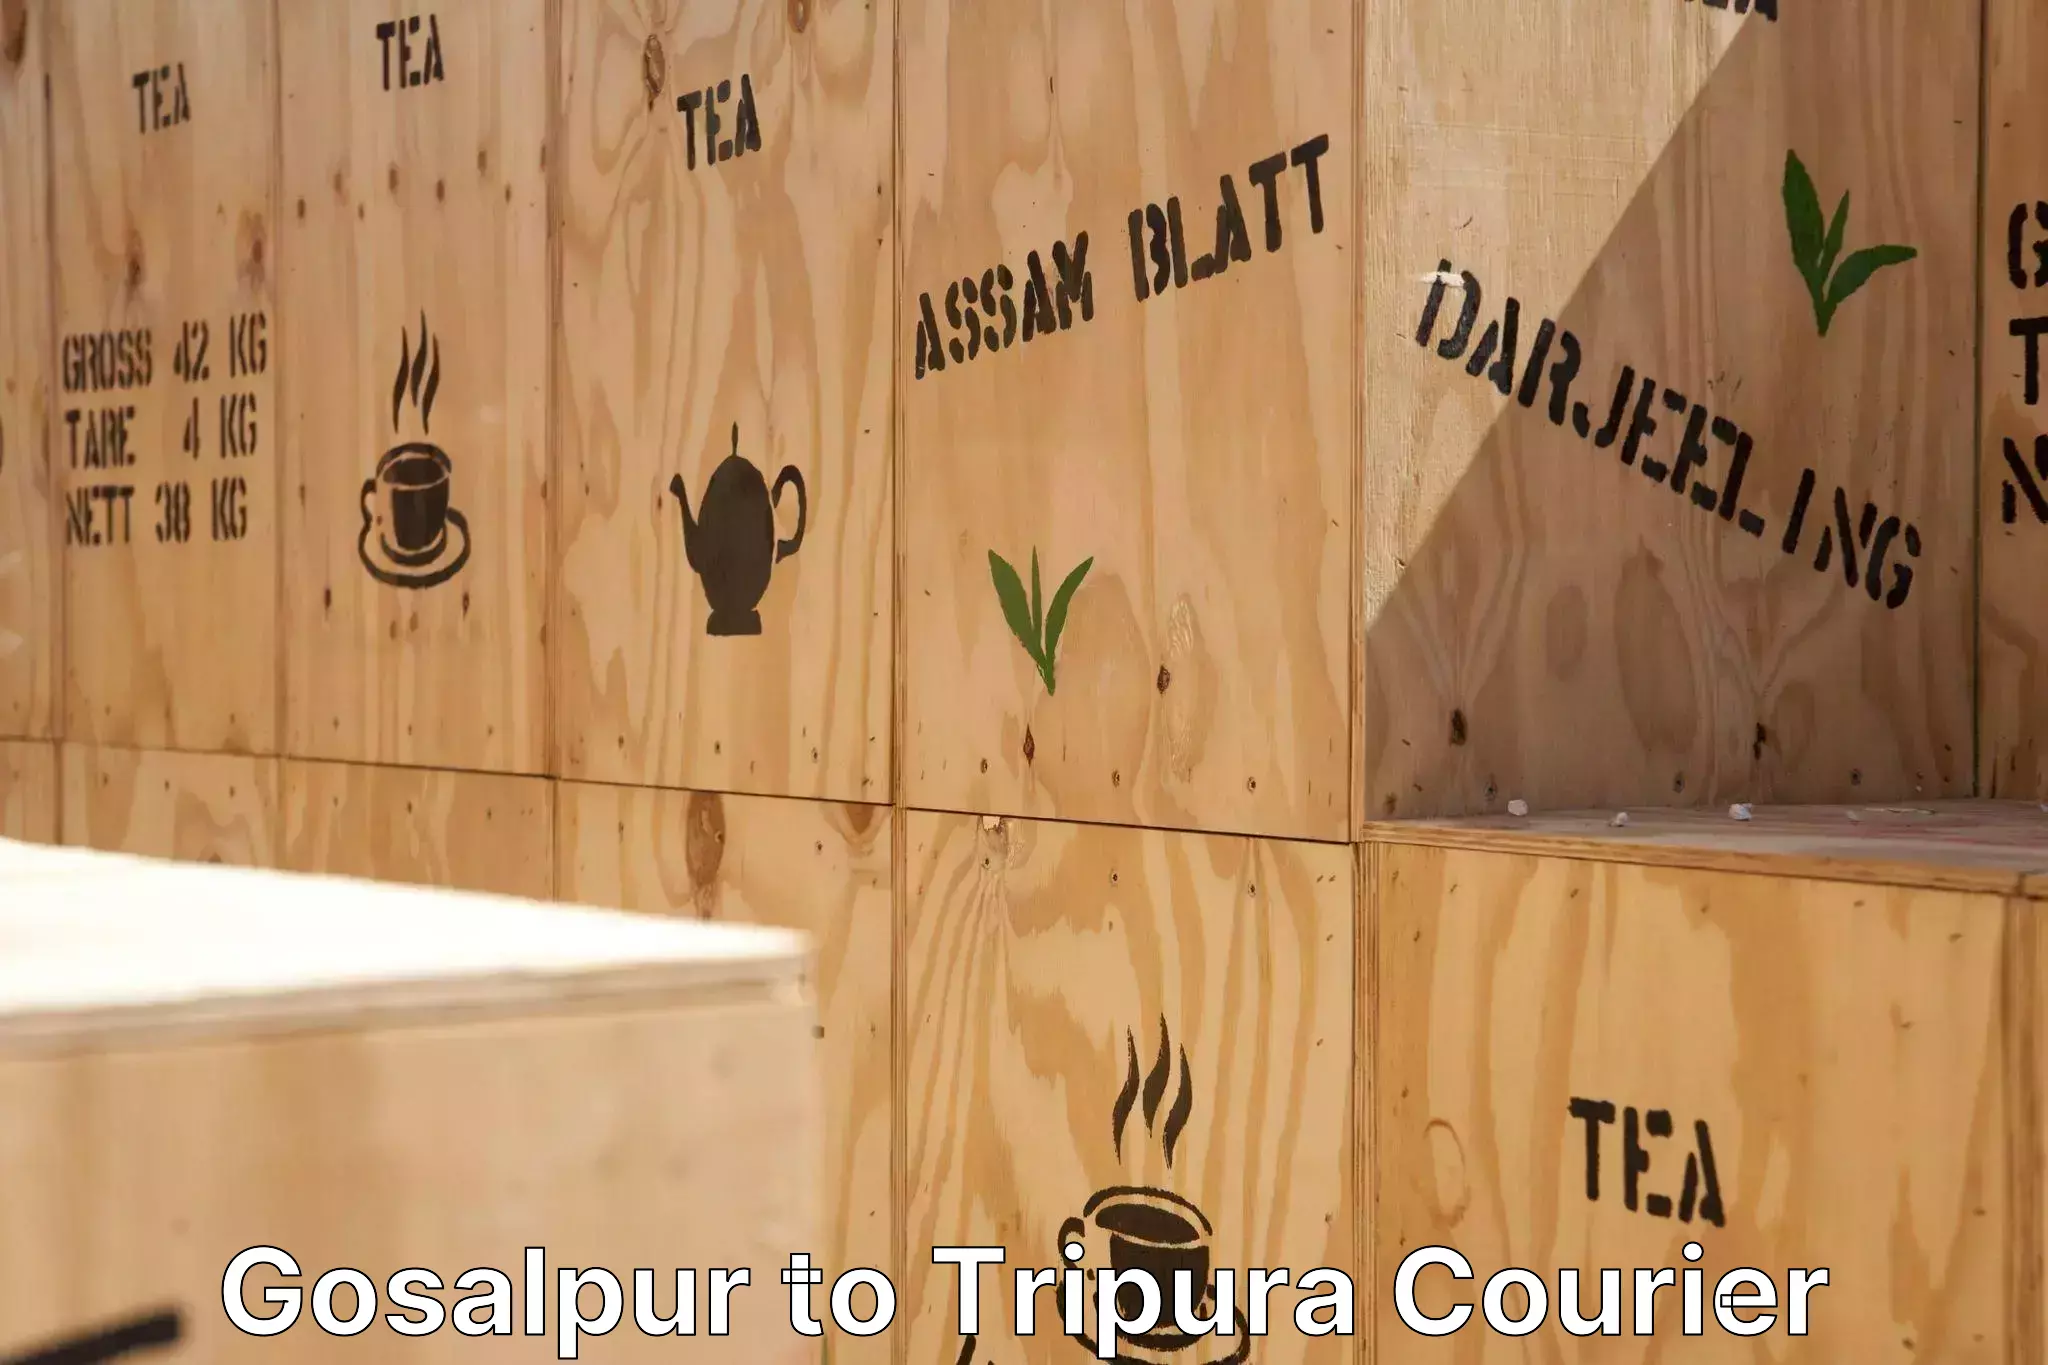 Professional relocation services Gosalpur to Udaipur Tripura